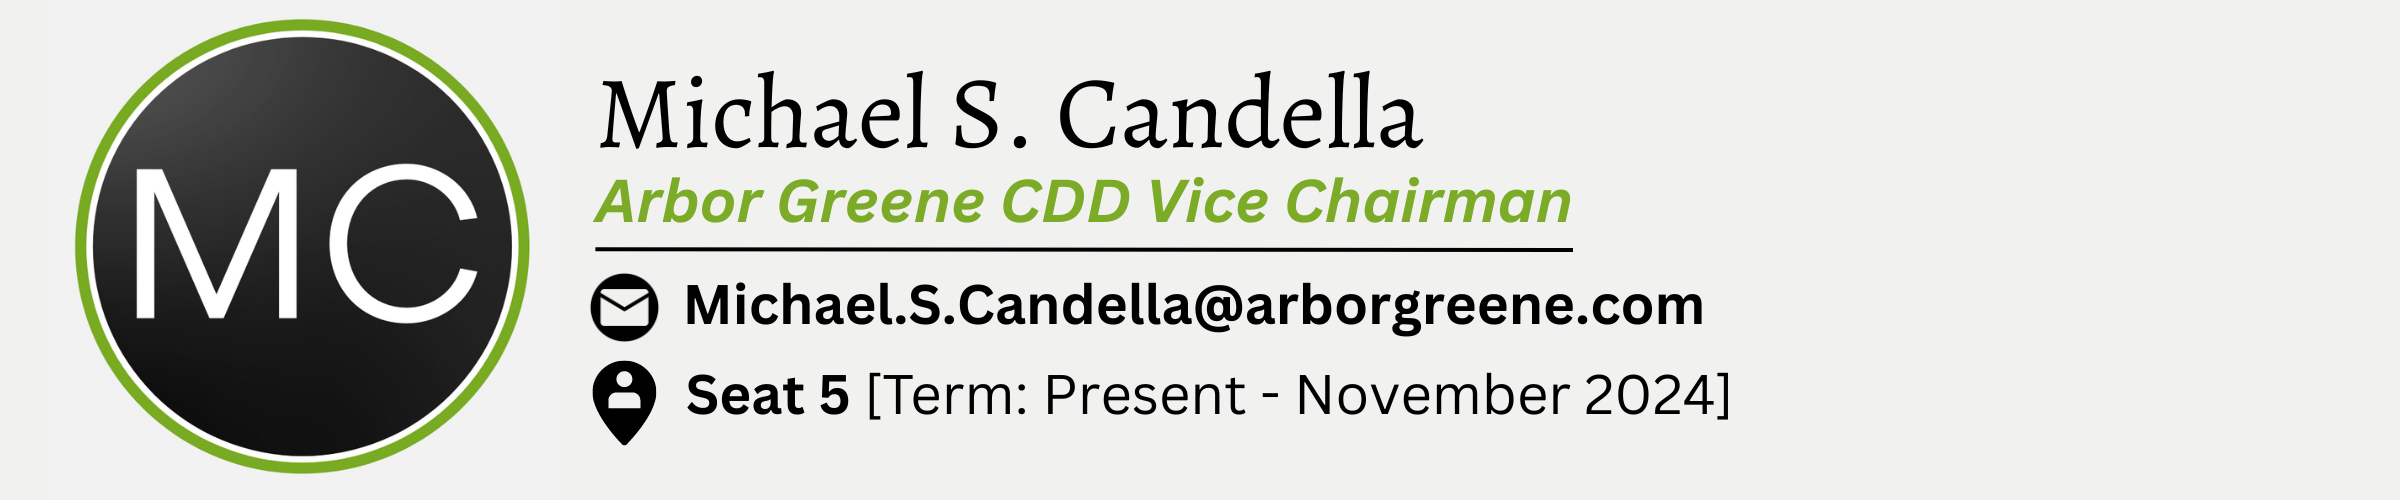 Michael S. Candella. Arbor Greene CDD Vice Chairman. E-Mail is Michael.S.Candella@arborgreene.com. Seat #5. Term from Present to November 2024.